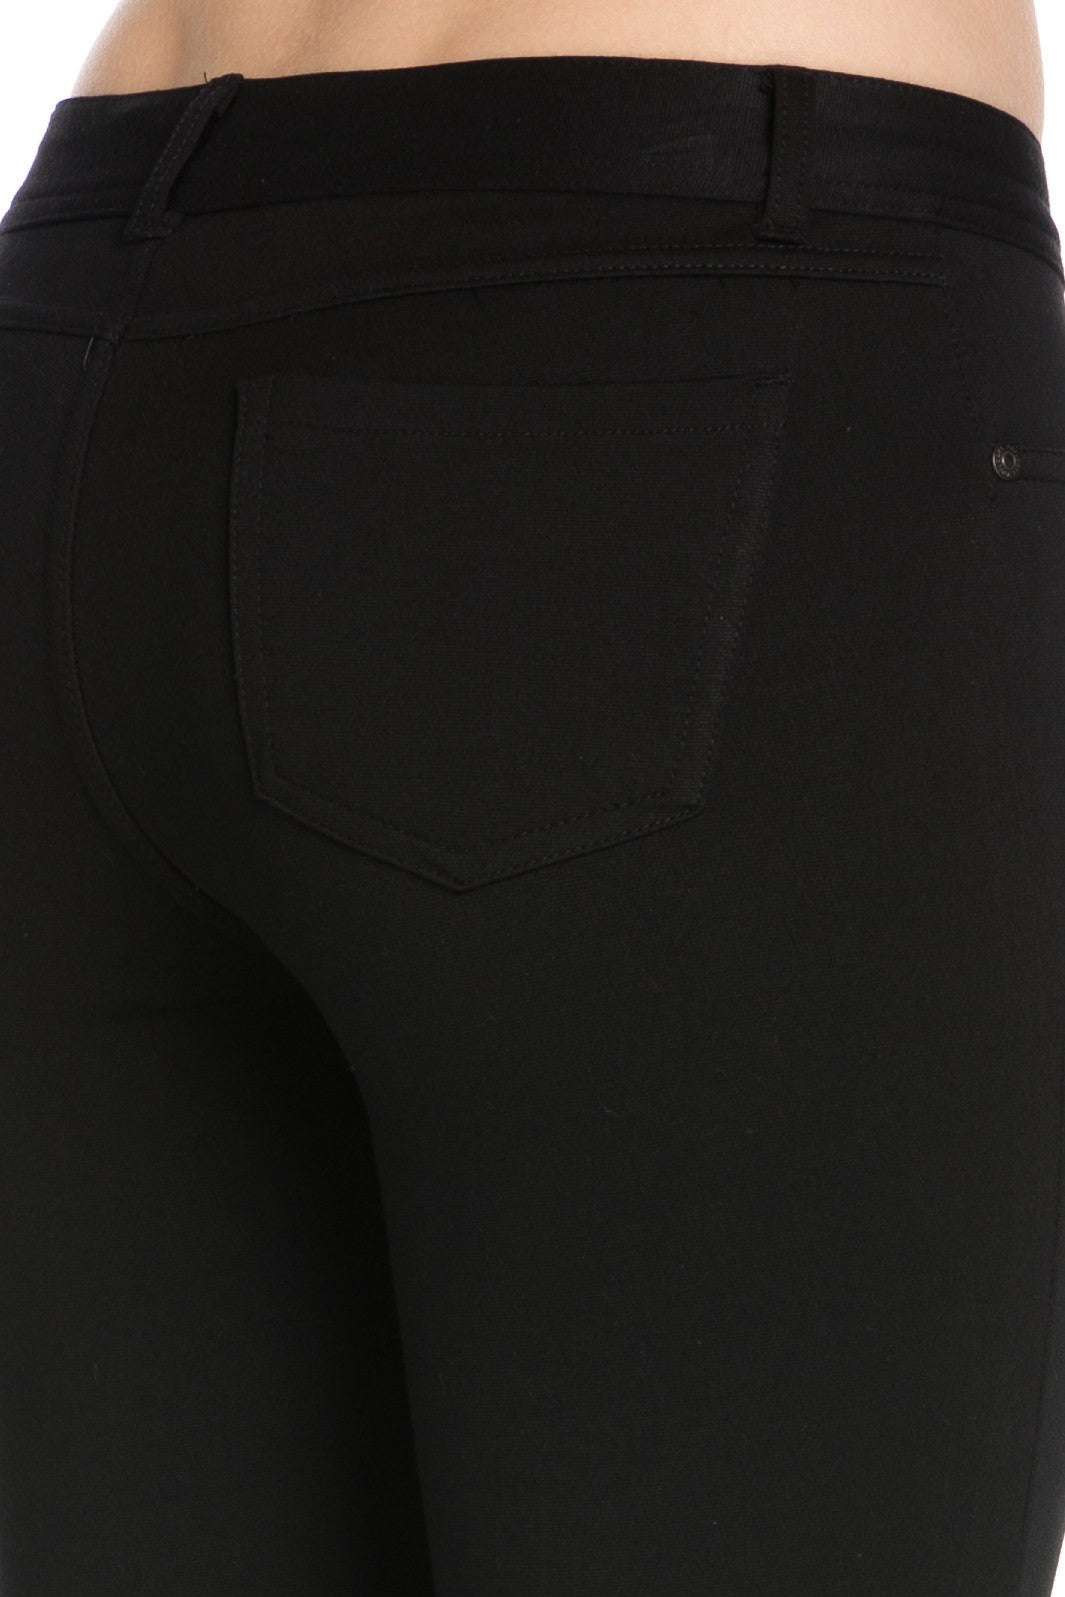 4 Way Stretchy Ponte Knit Capri Skinny Jeans (Black) - Poplooks